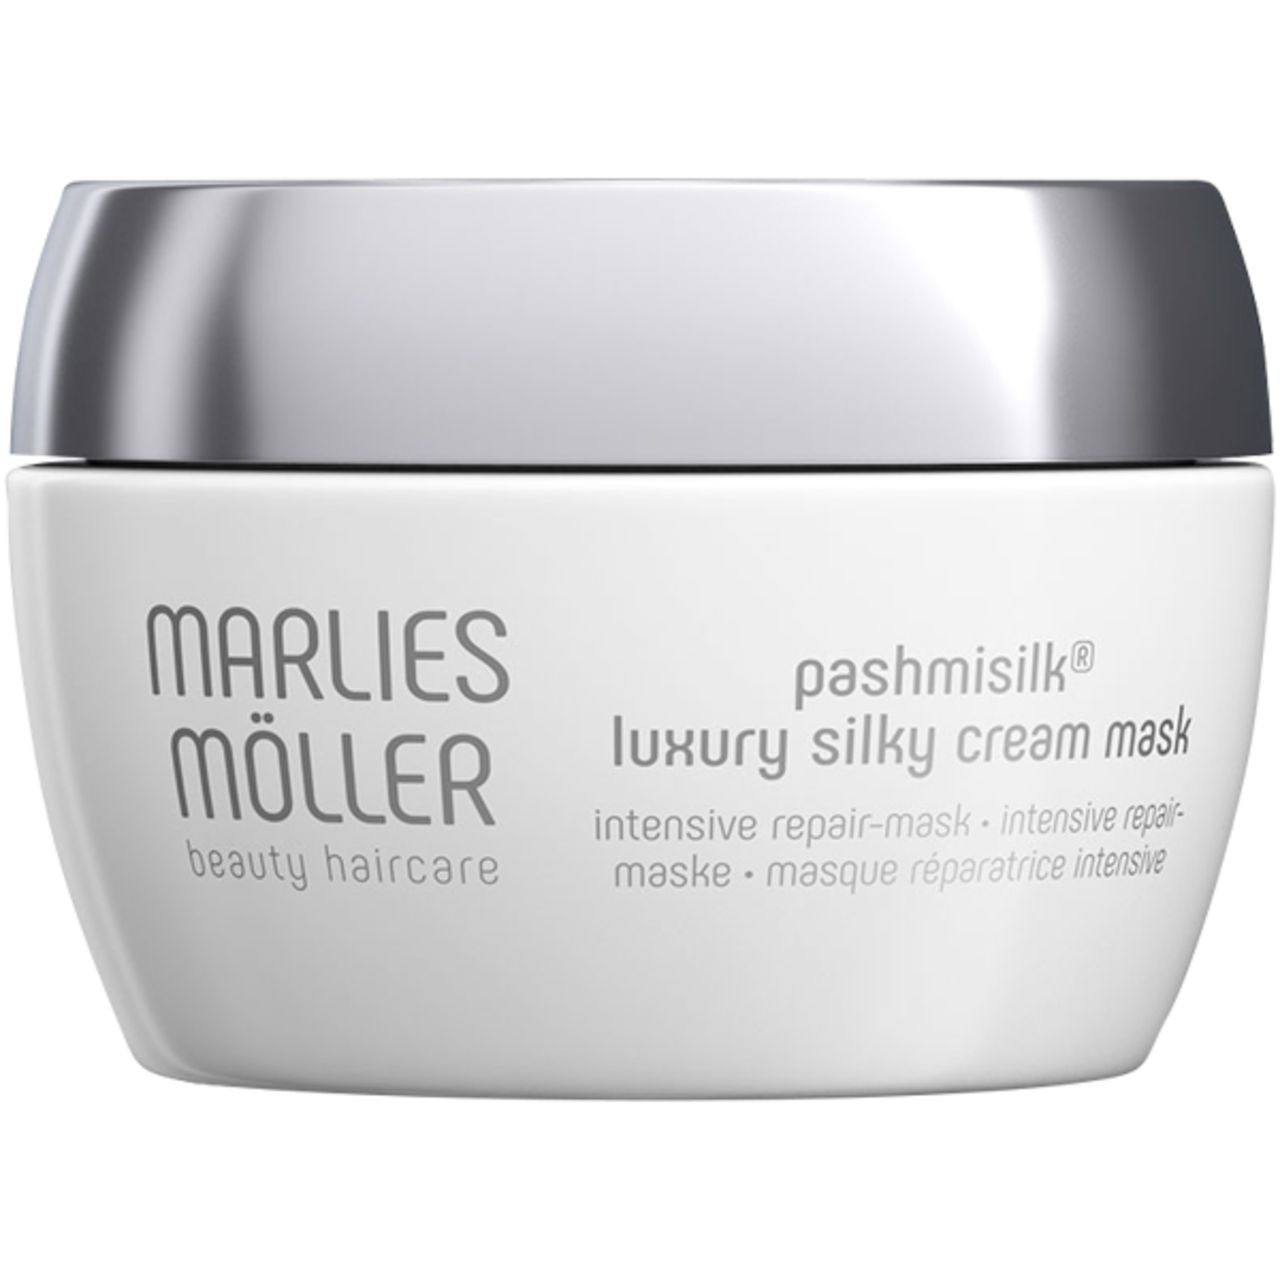 Marlies Möller beauty haircare Pashmisilk Silky Cream Mask